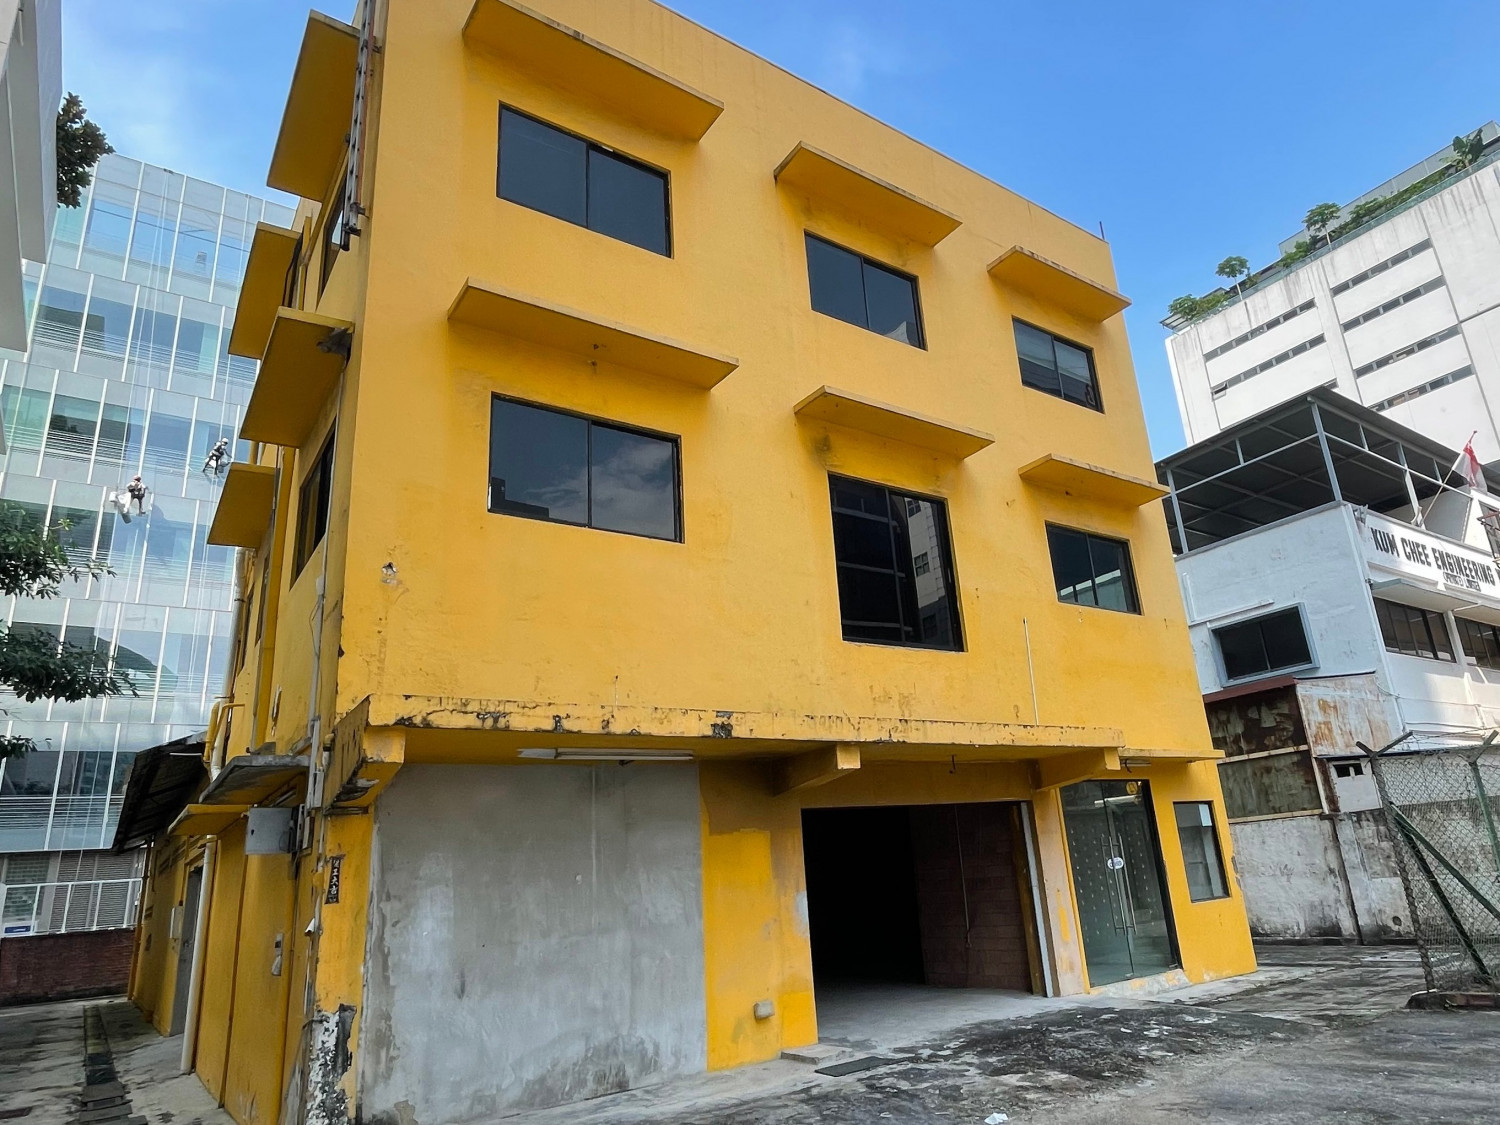 Industrial property at Jalan Lembah Kallang for sale at $7.5 mil - Property News